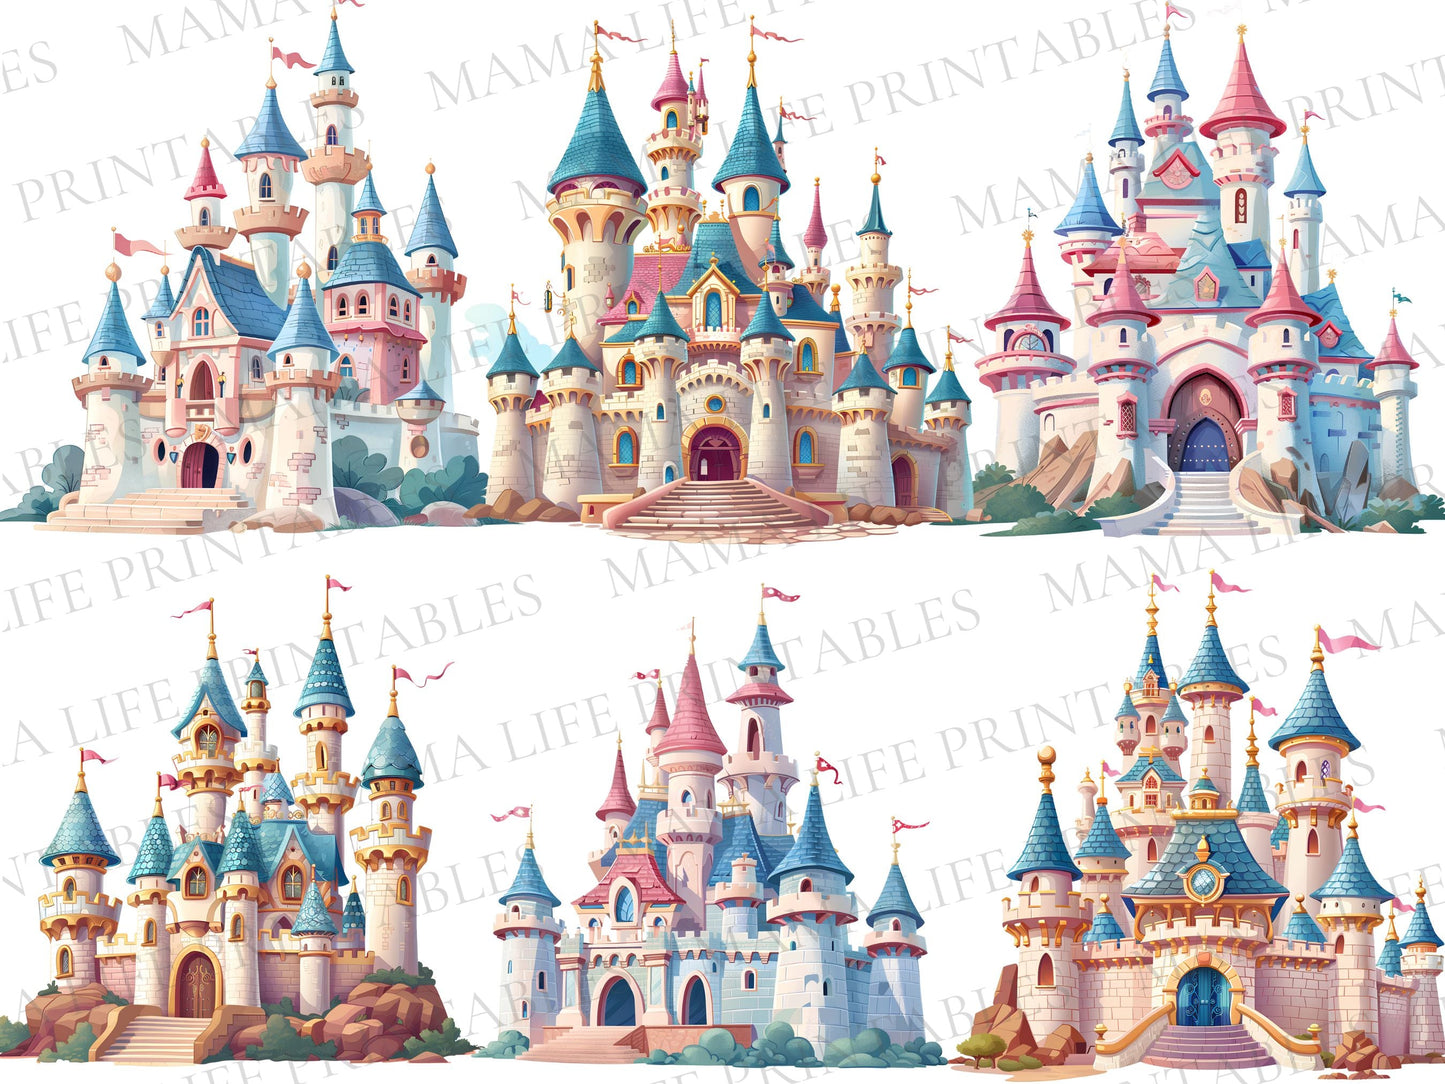 Fairy Tales Castles PNG Cliparts - Digital Artwork - Mama Life Printables